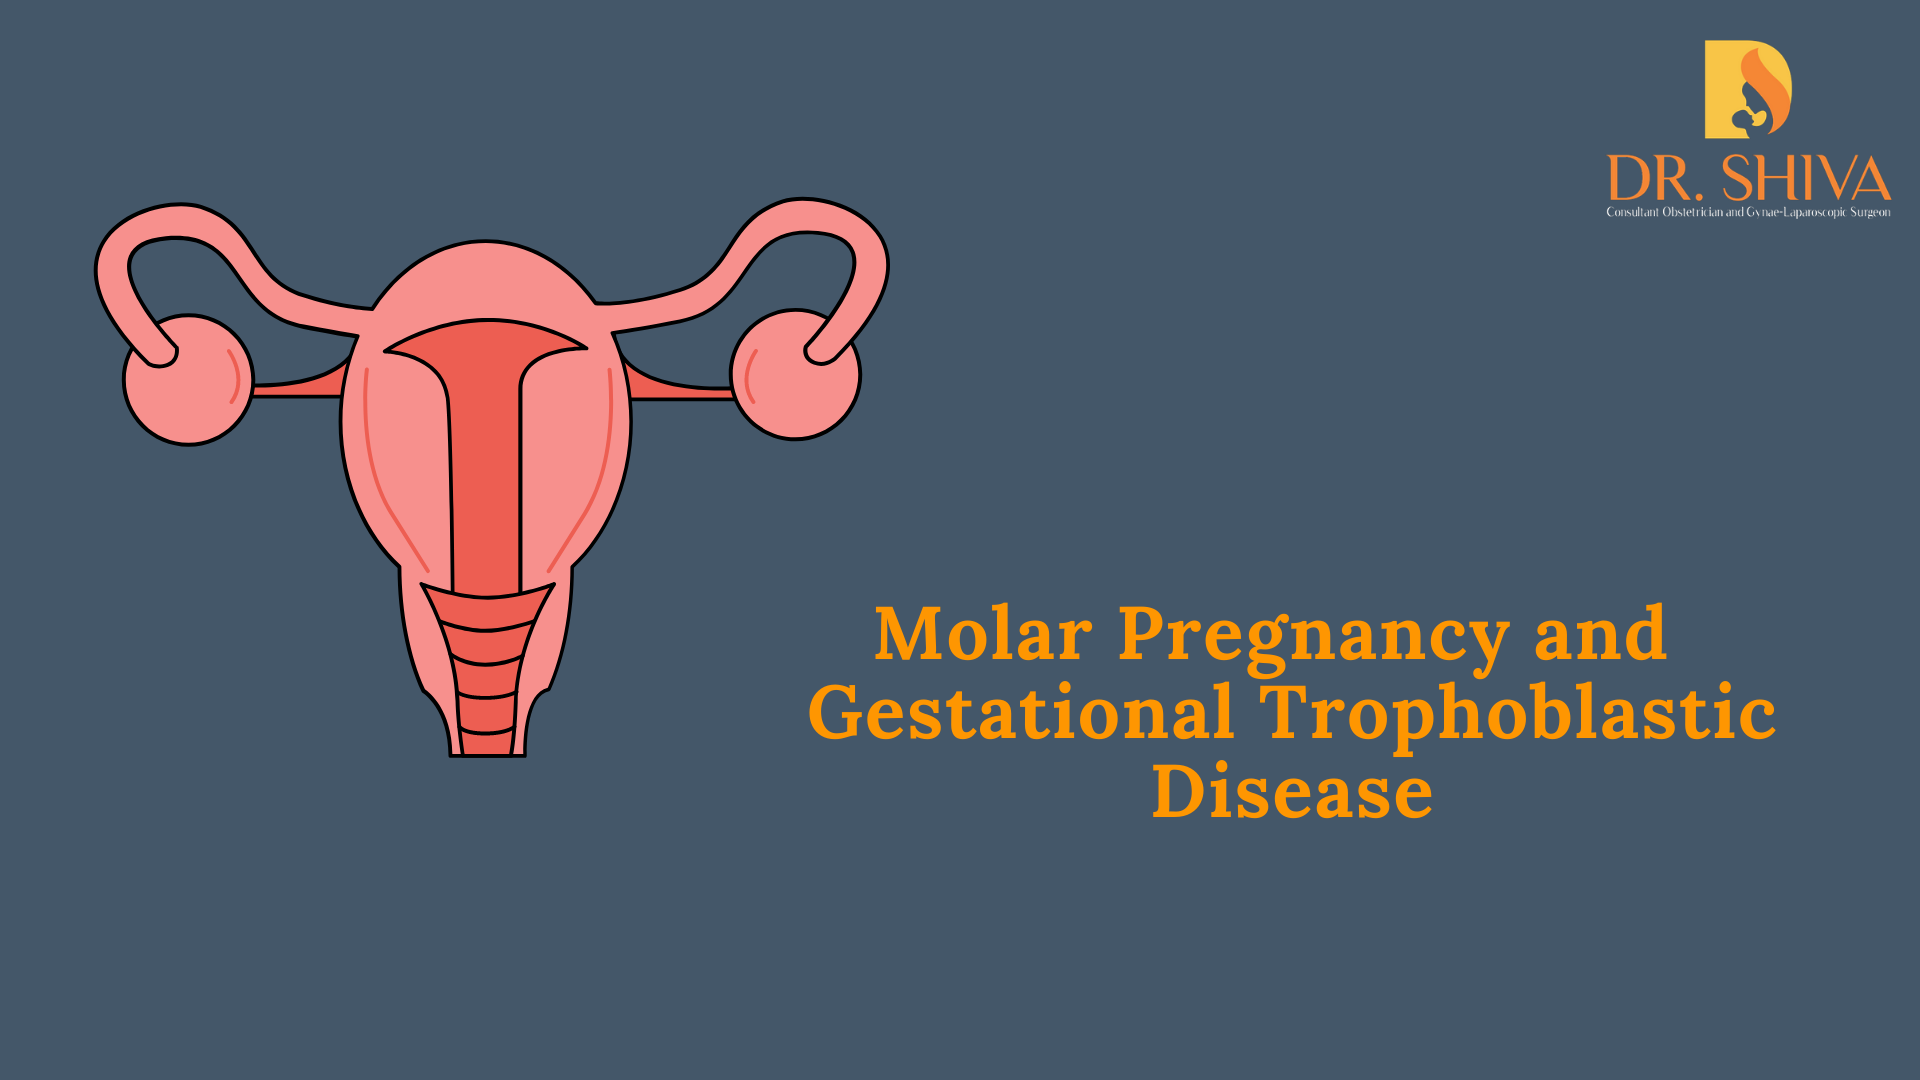 Molar pregnancy and GTD